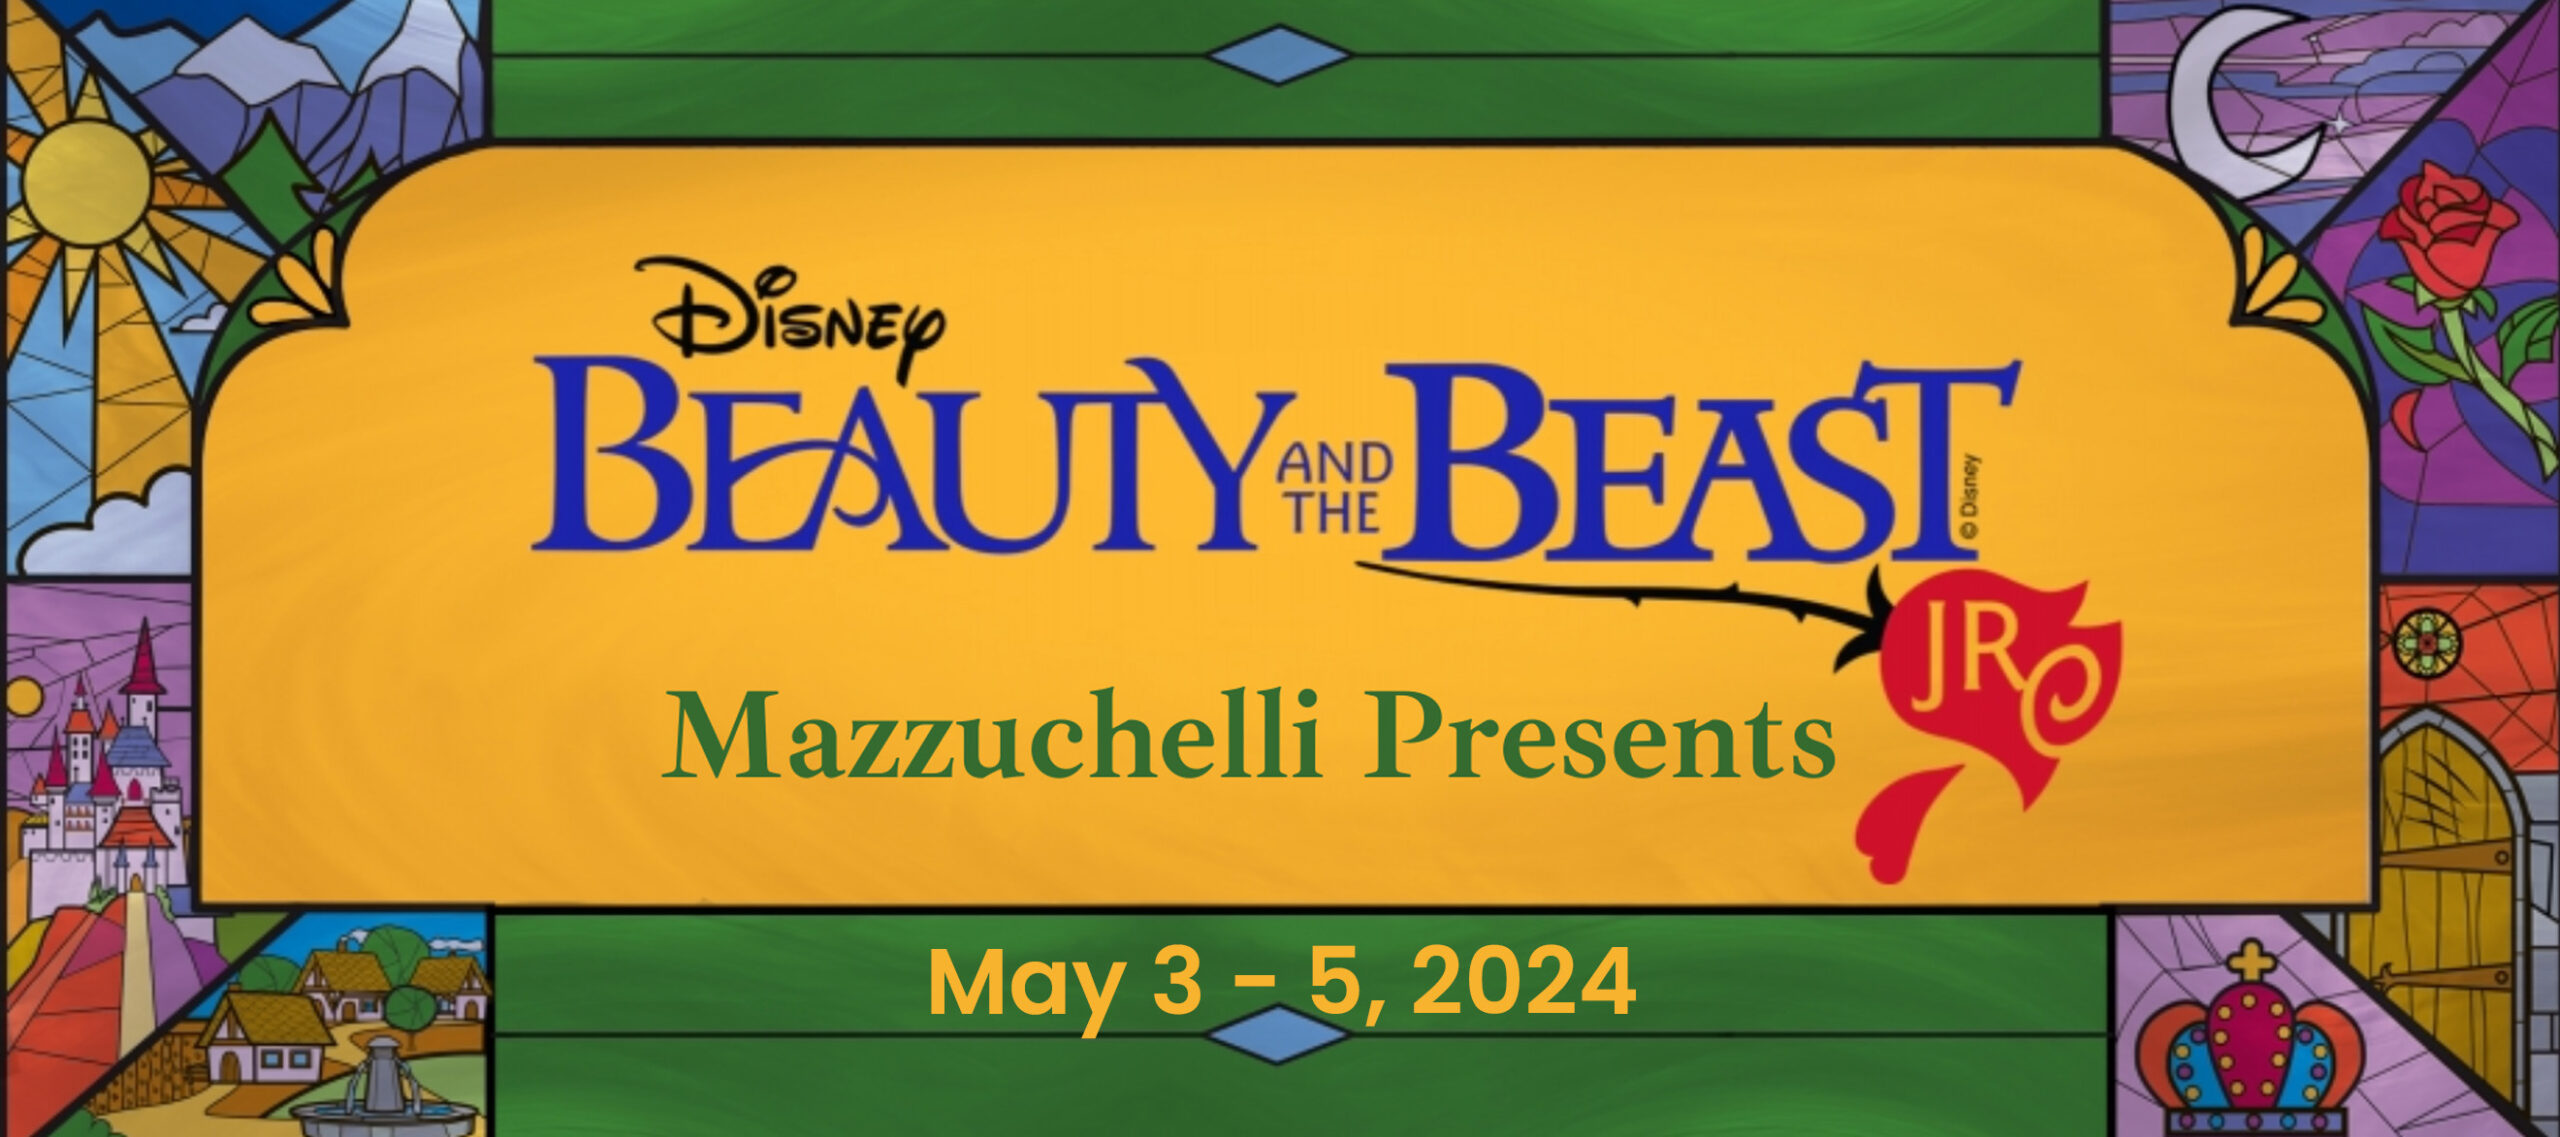 Mazzuchelli Catholic Middle School presents Disney’s Beauty and the Beast Jr.